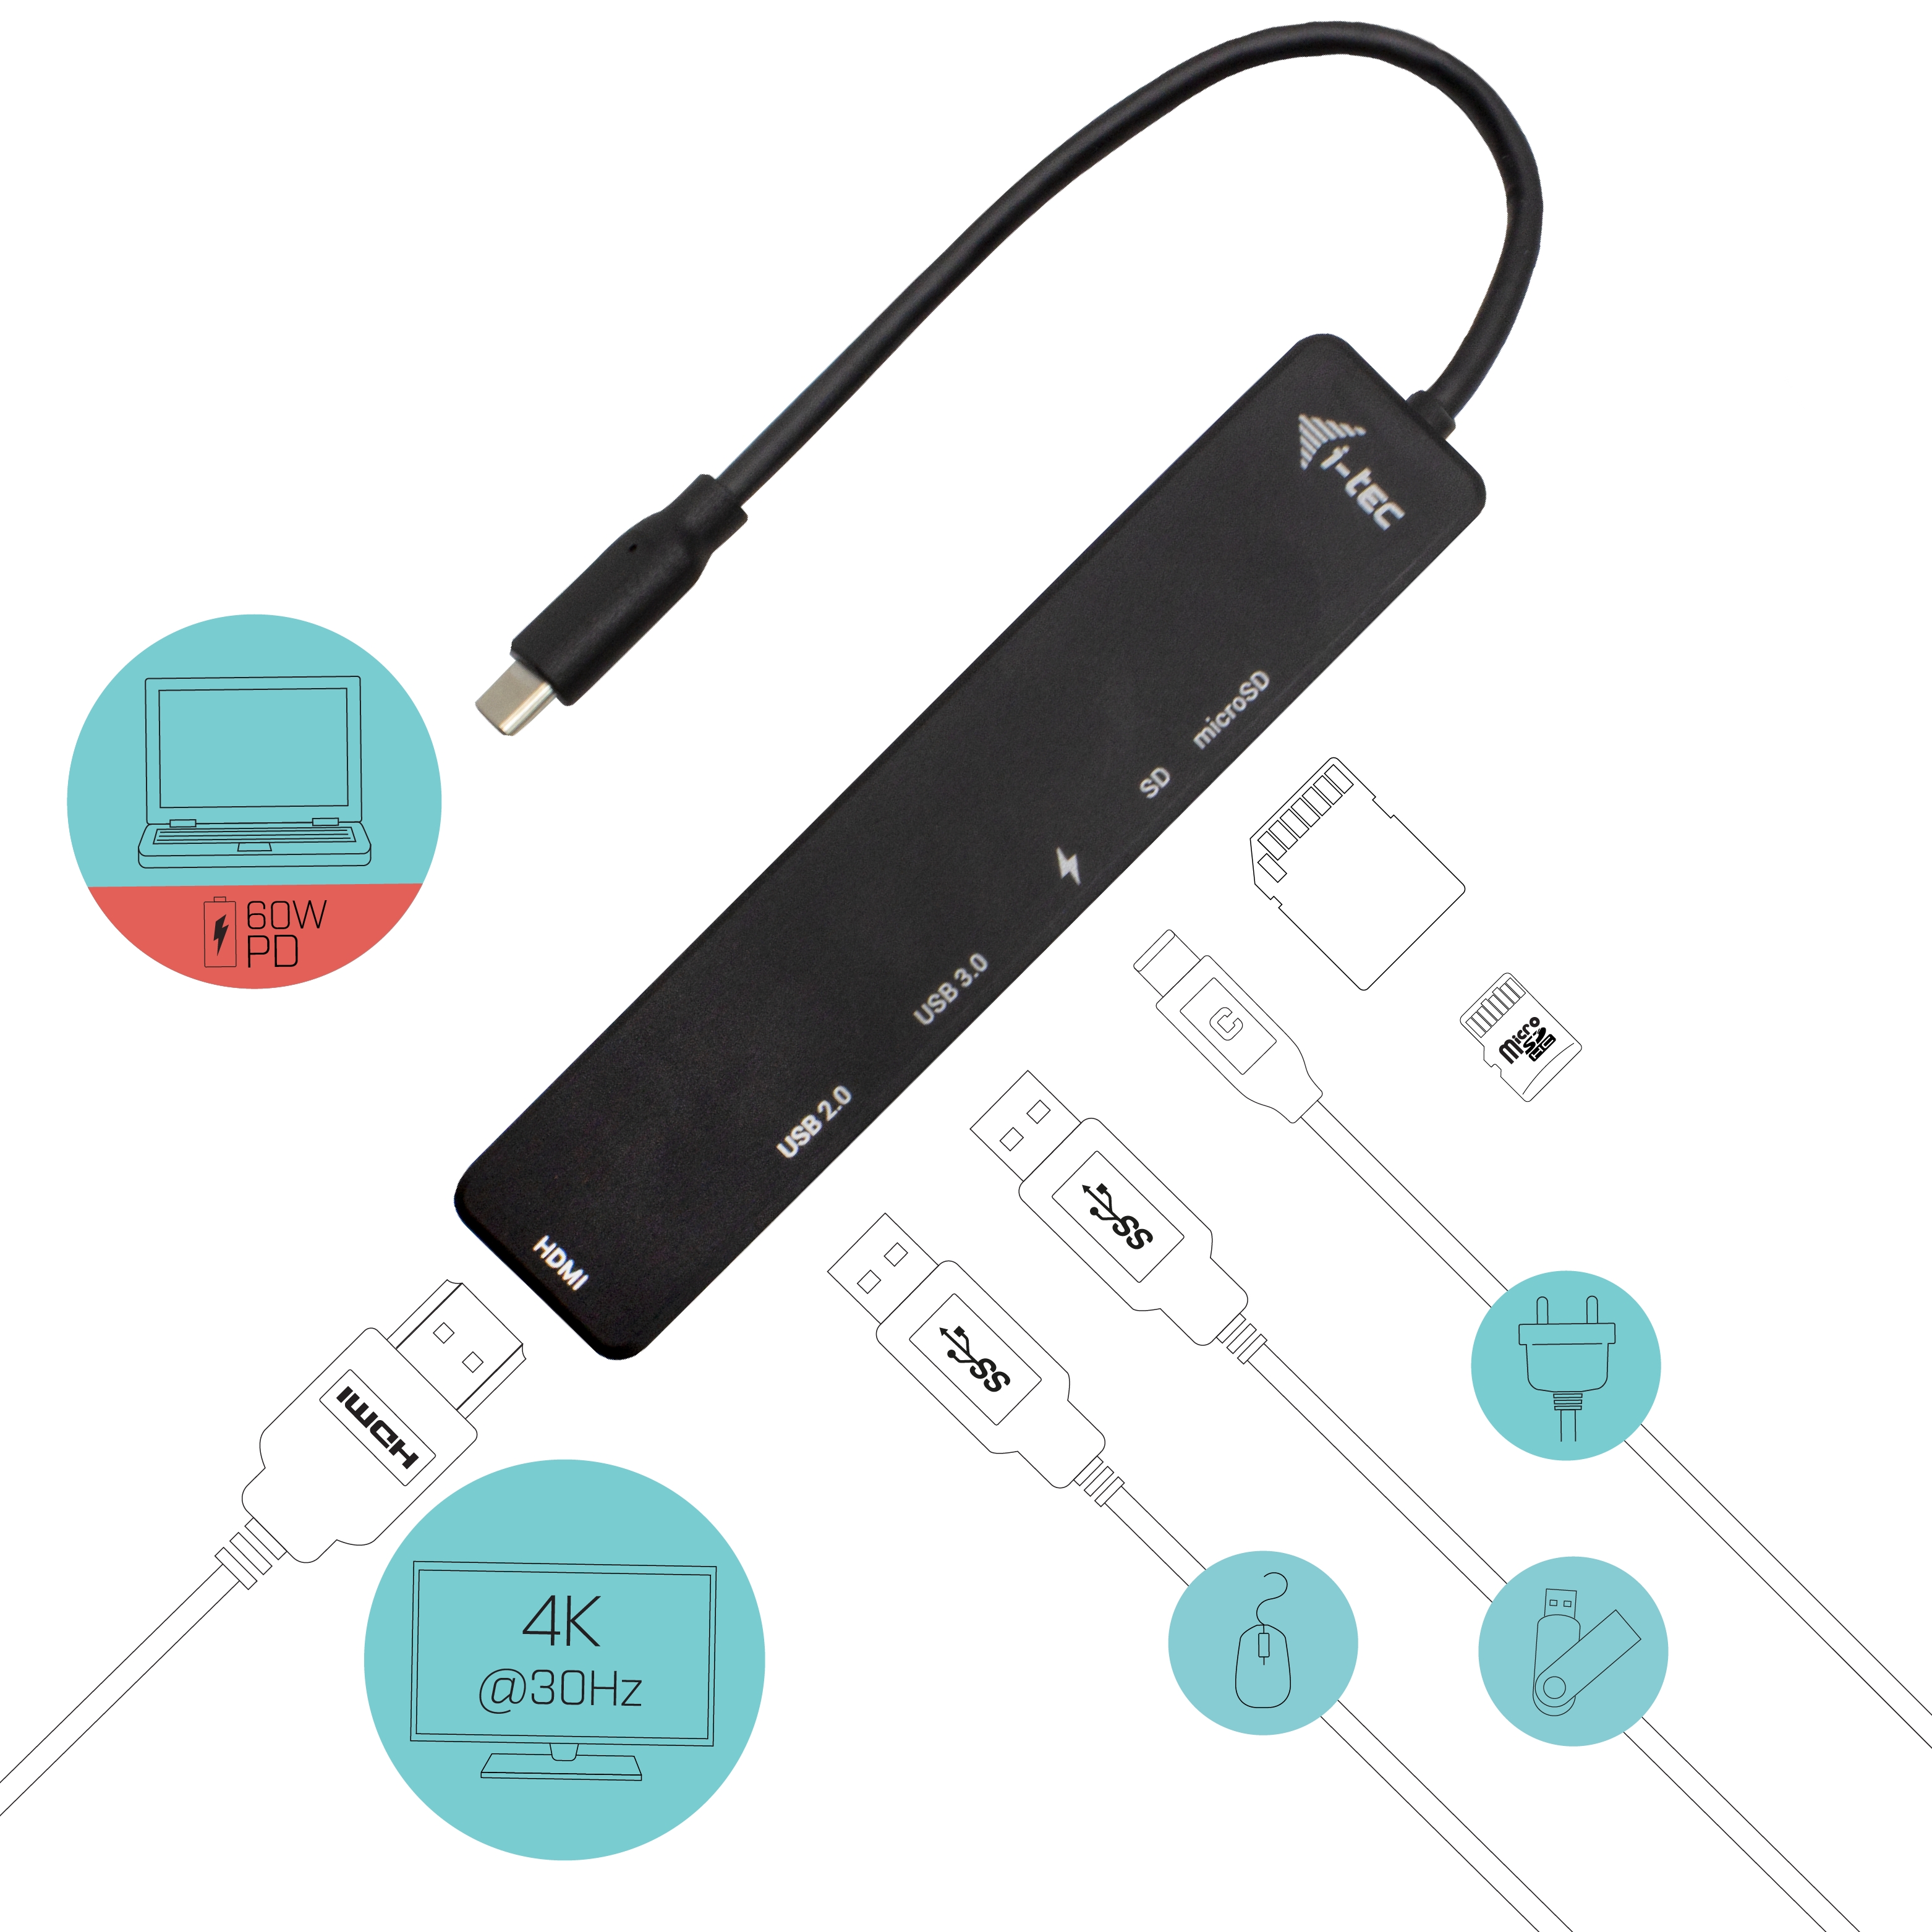 i-tec USB-C Travel Easy Dock 4K HDMI, Power Delivery 60 W 